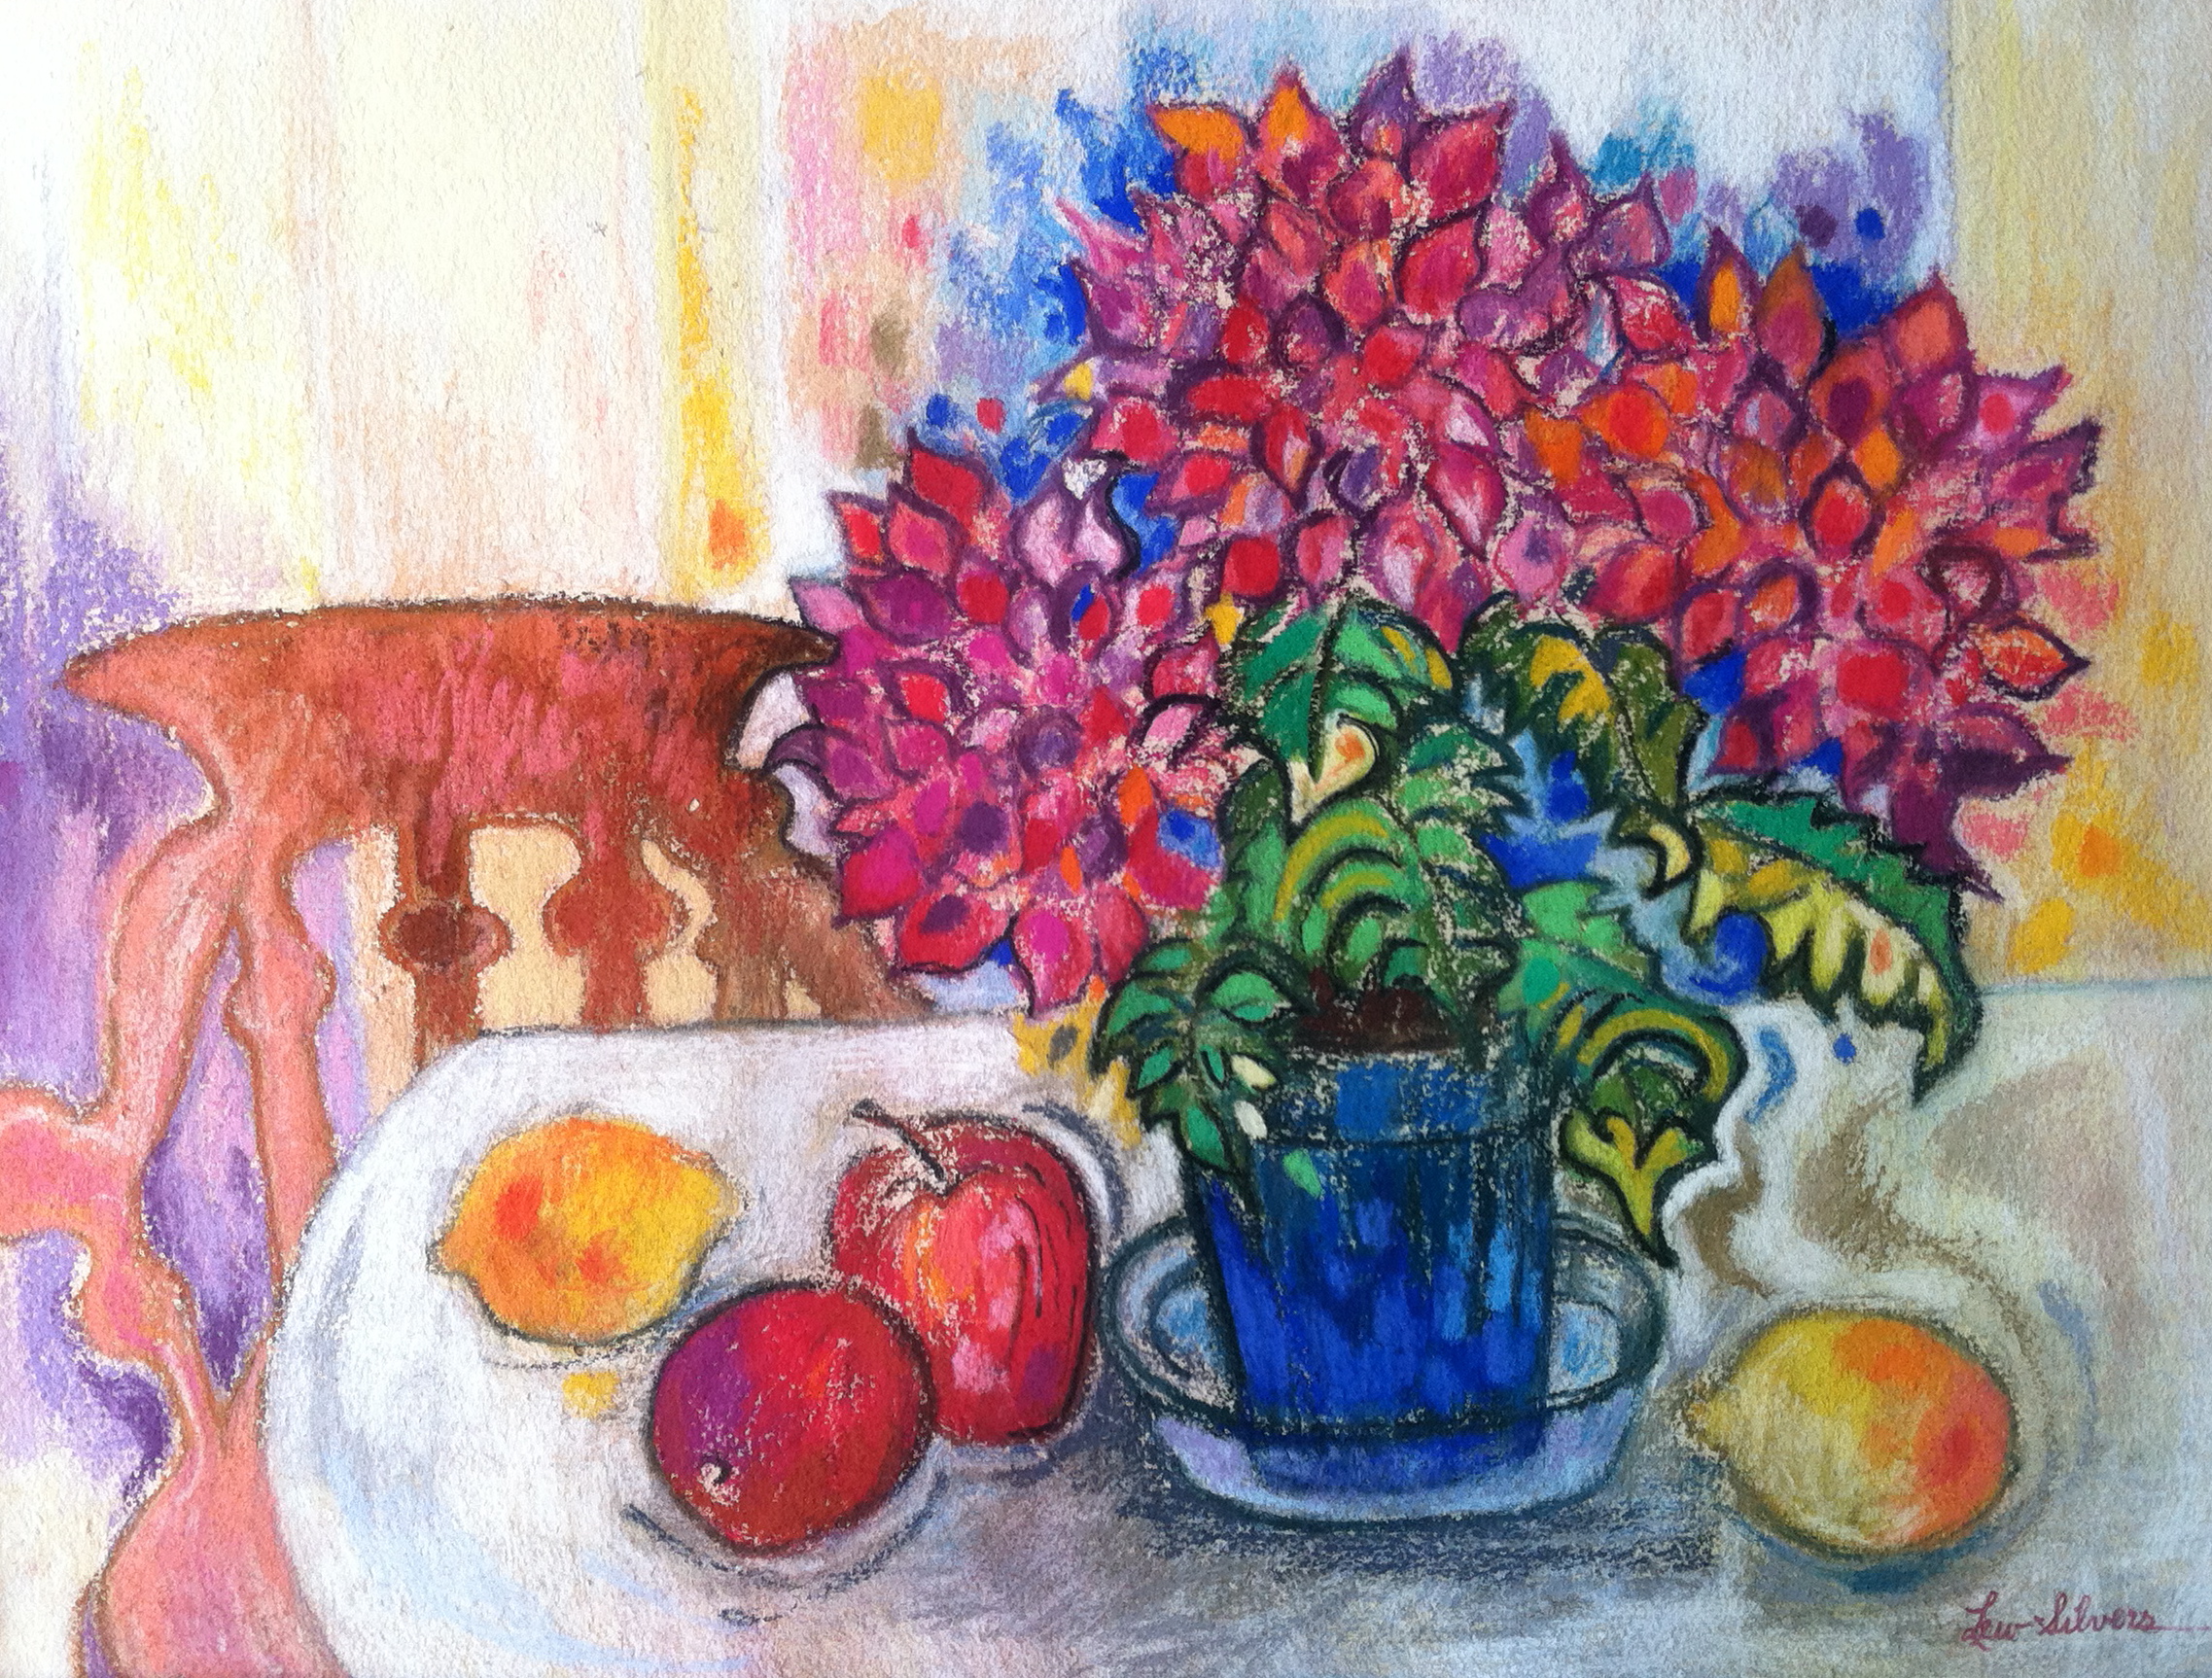 Hydrangea, Apples and Lemons 2/13